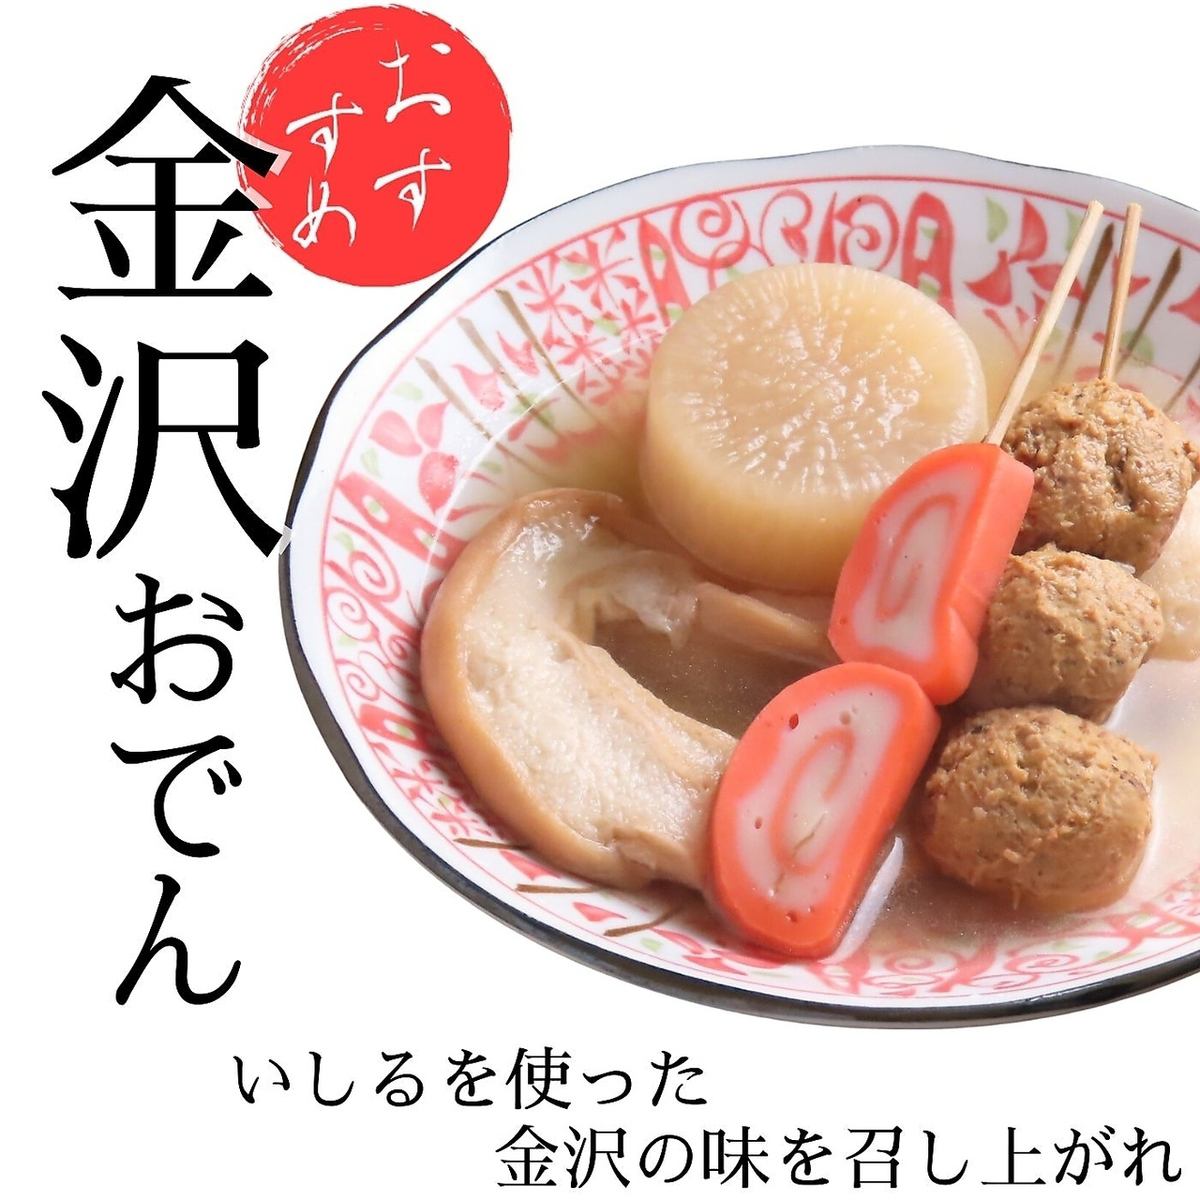 When you think of Kanazawa, you think of oden.Please enjoy Kanazawa Oden.